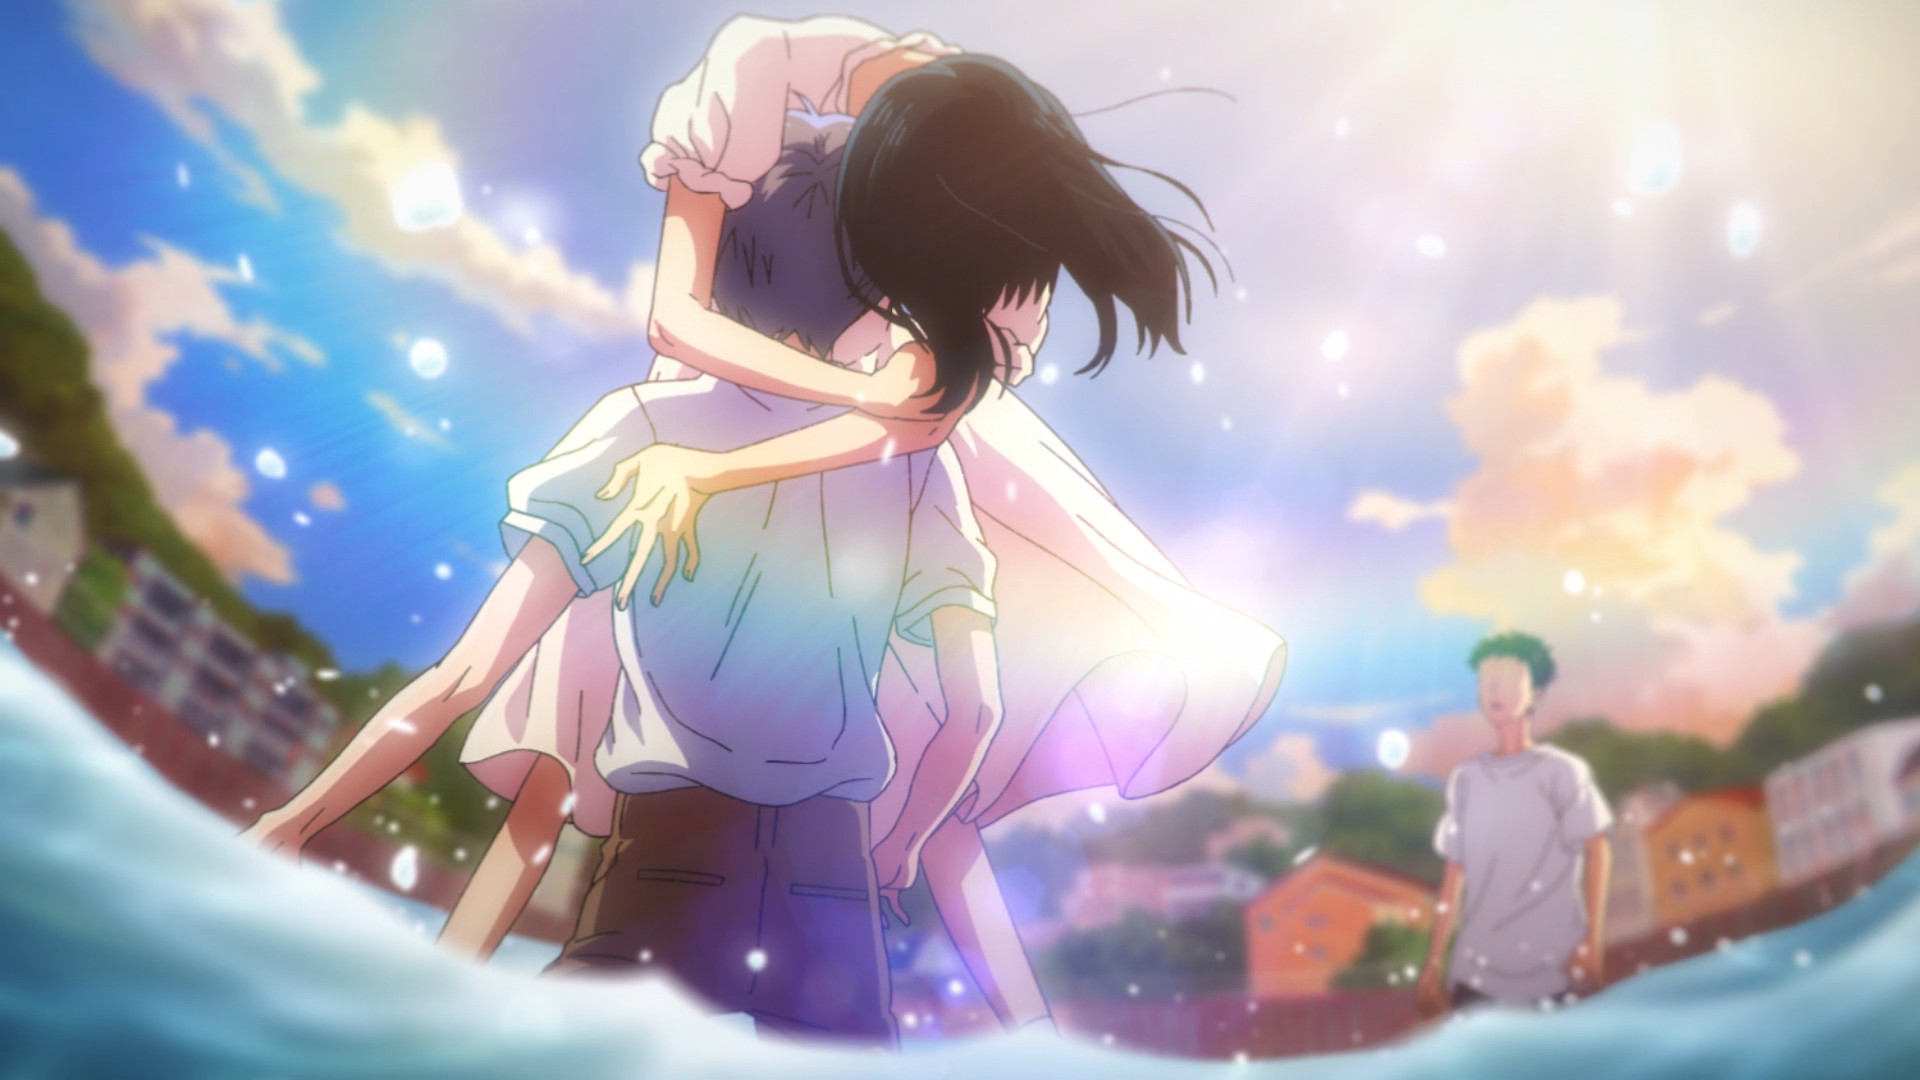 Blue Lock Episode #24 Anime Review (Season Finale)